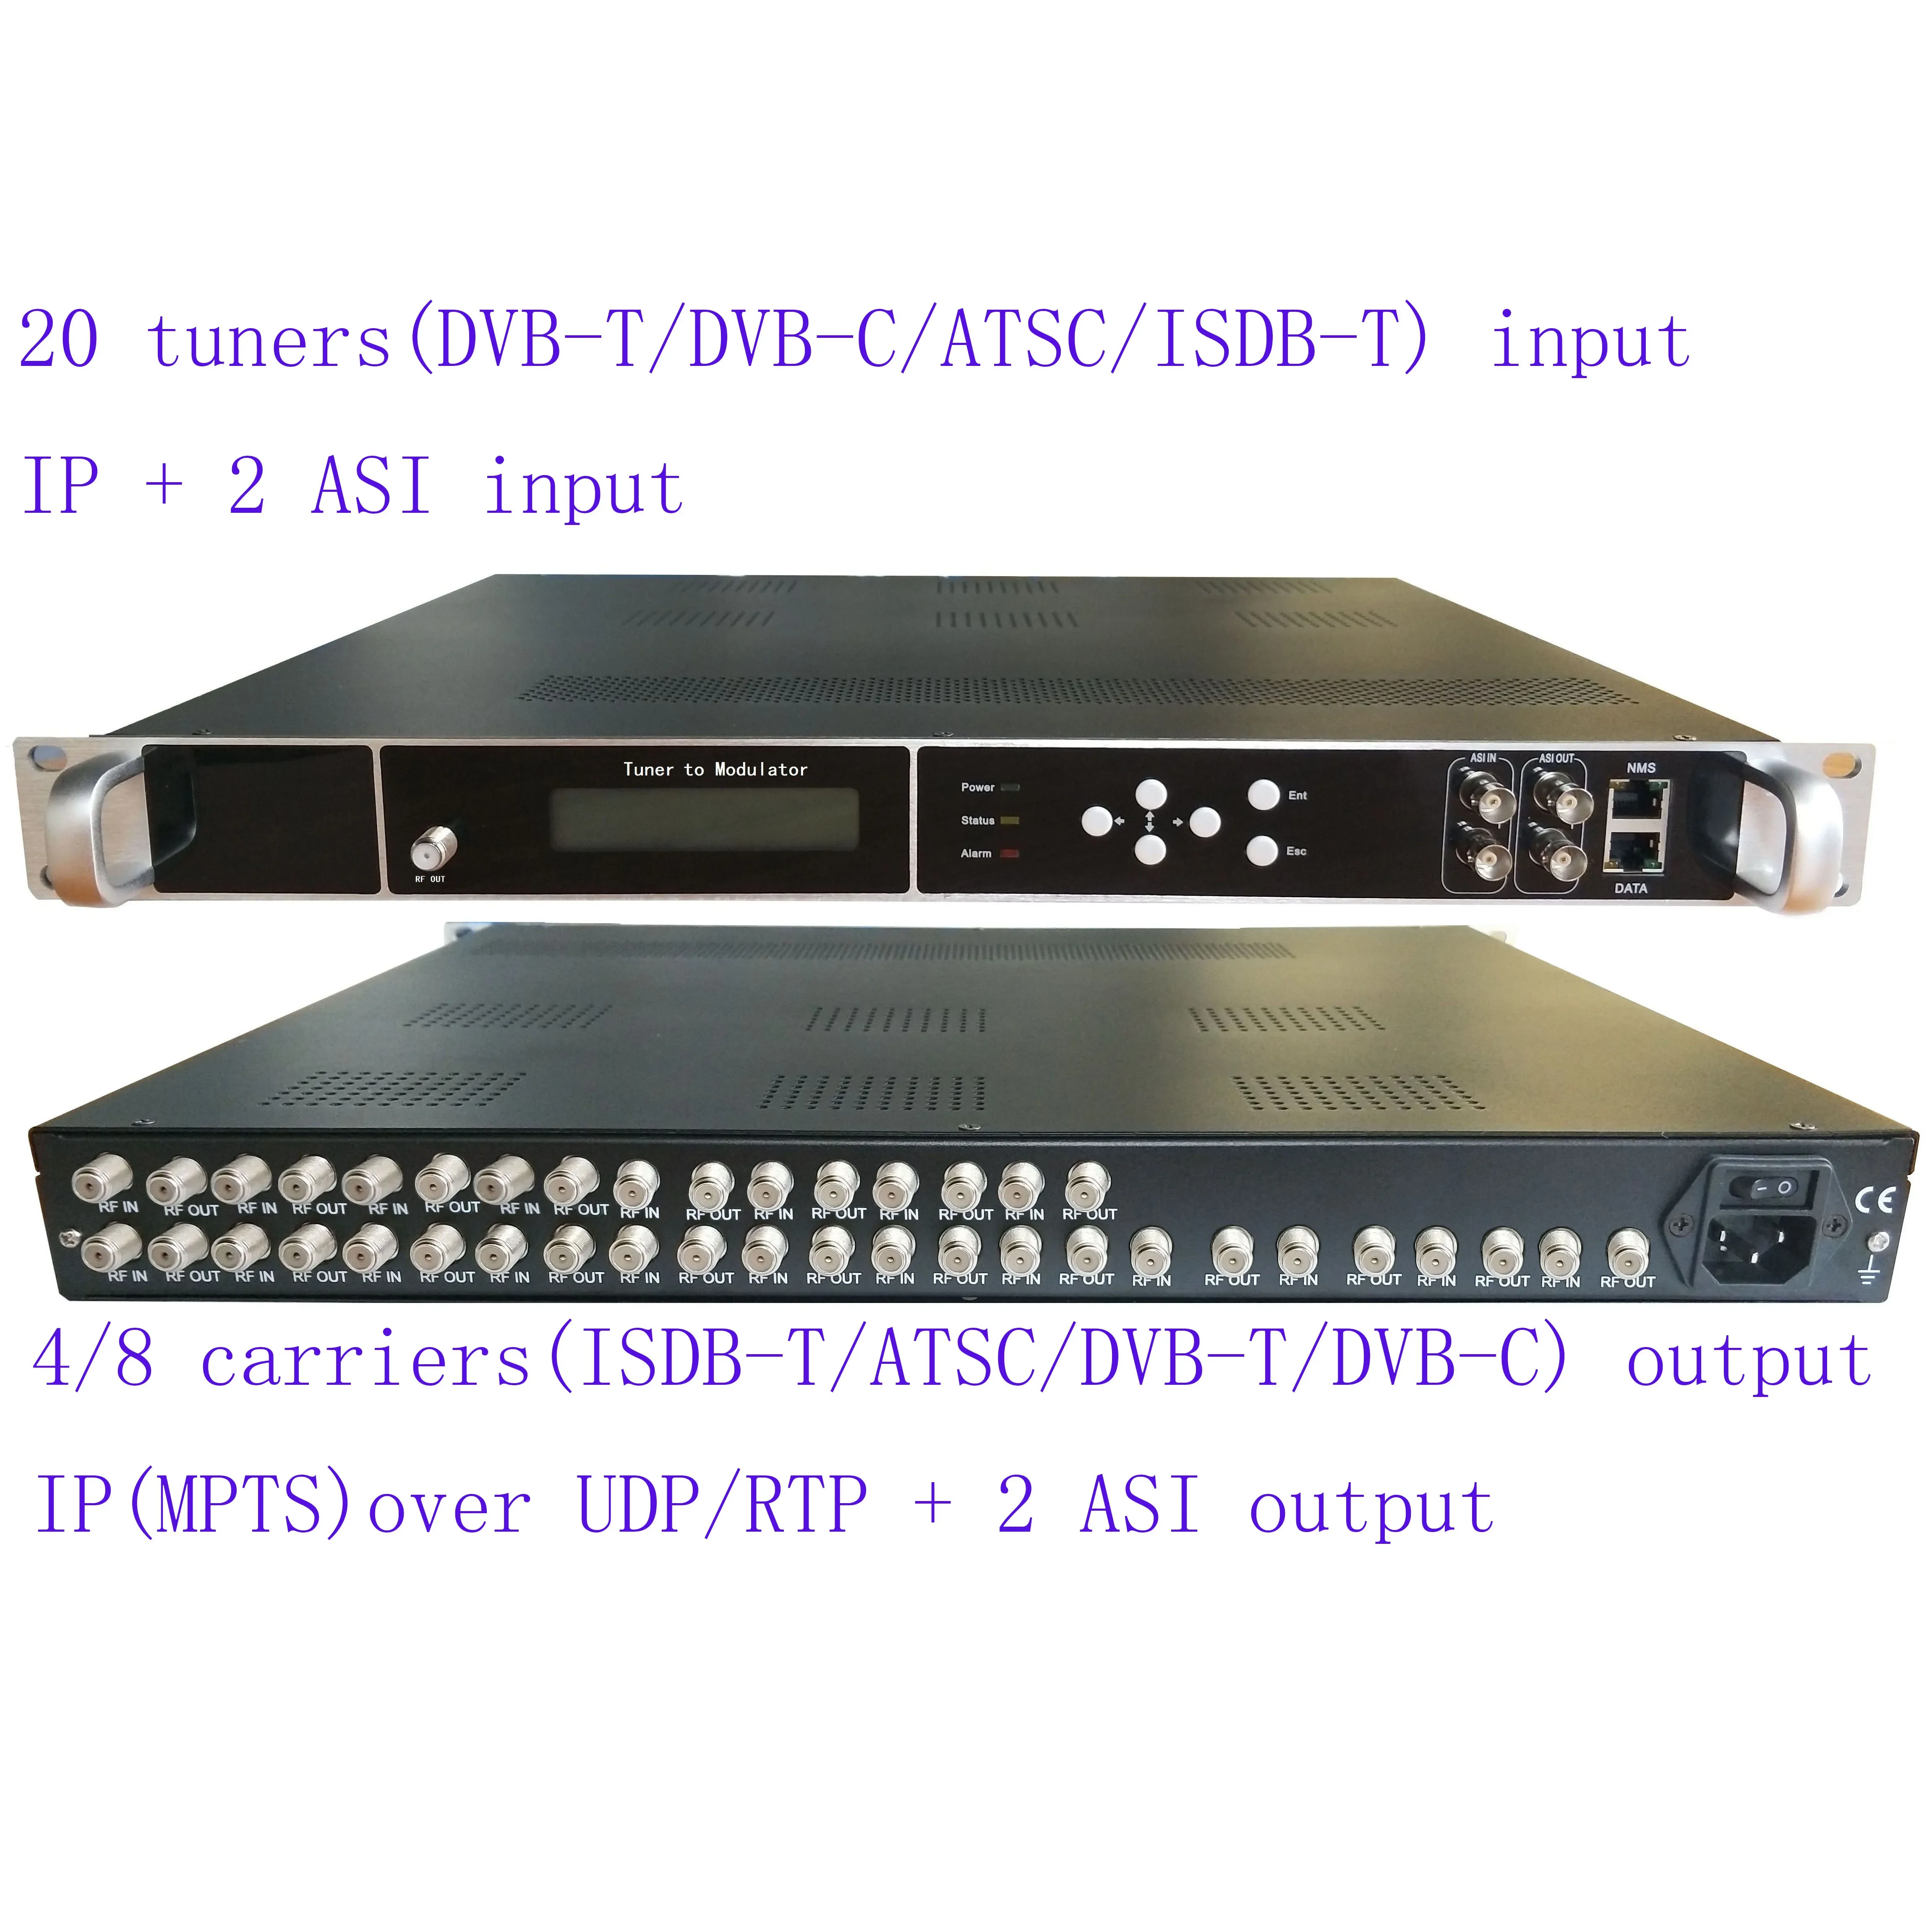 

20 way dvb-s2/S to DVB-T/DVB-C catv digital modulator, tuner to DVB-T/DVB-C RF modulator, TV headend for hotel/hospital/school